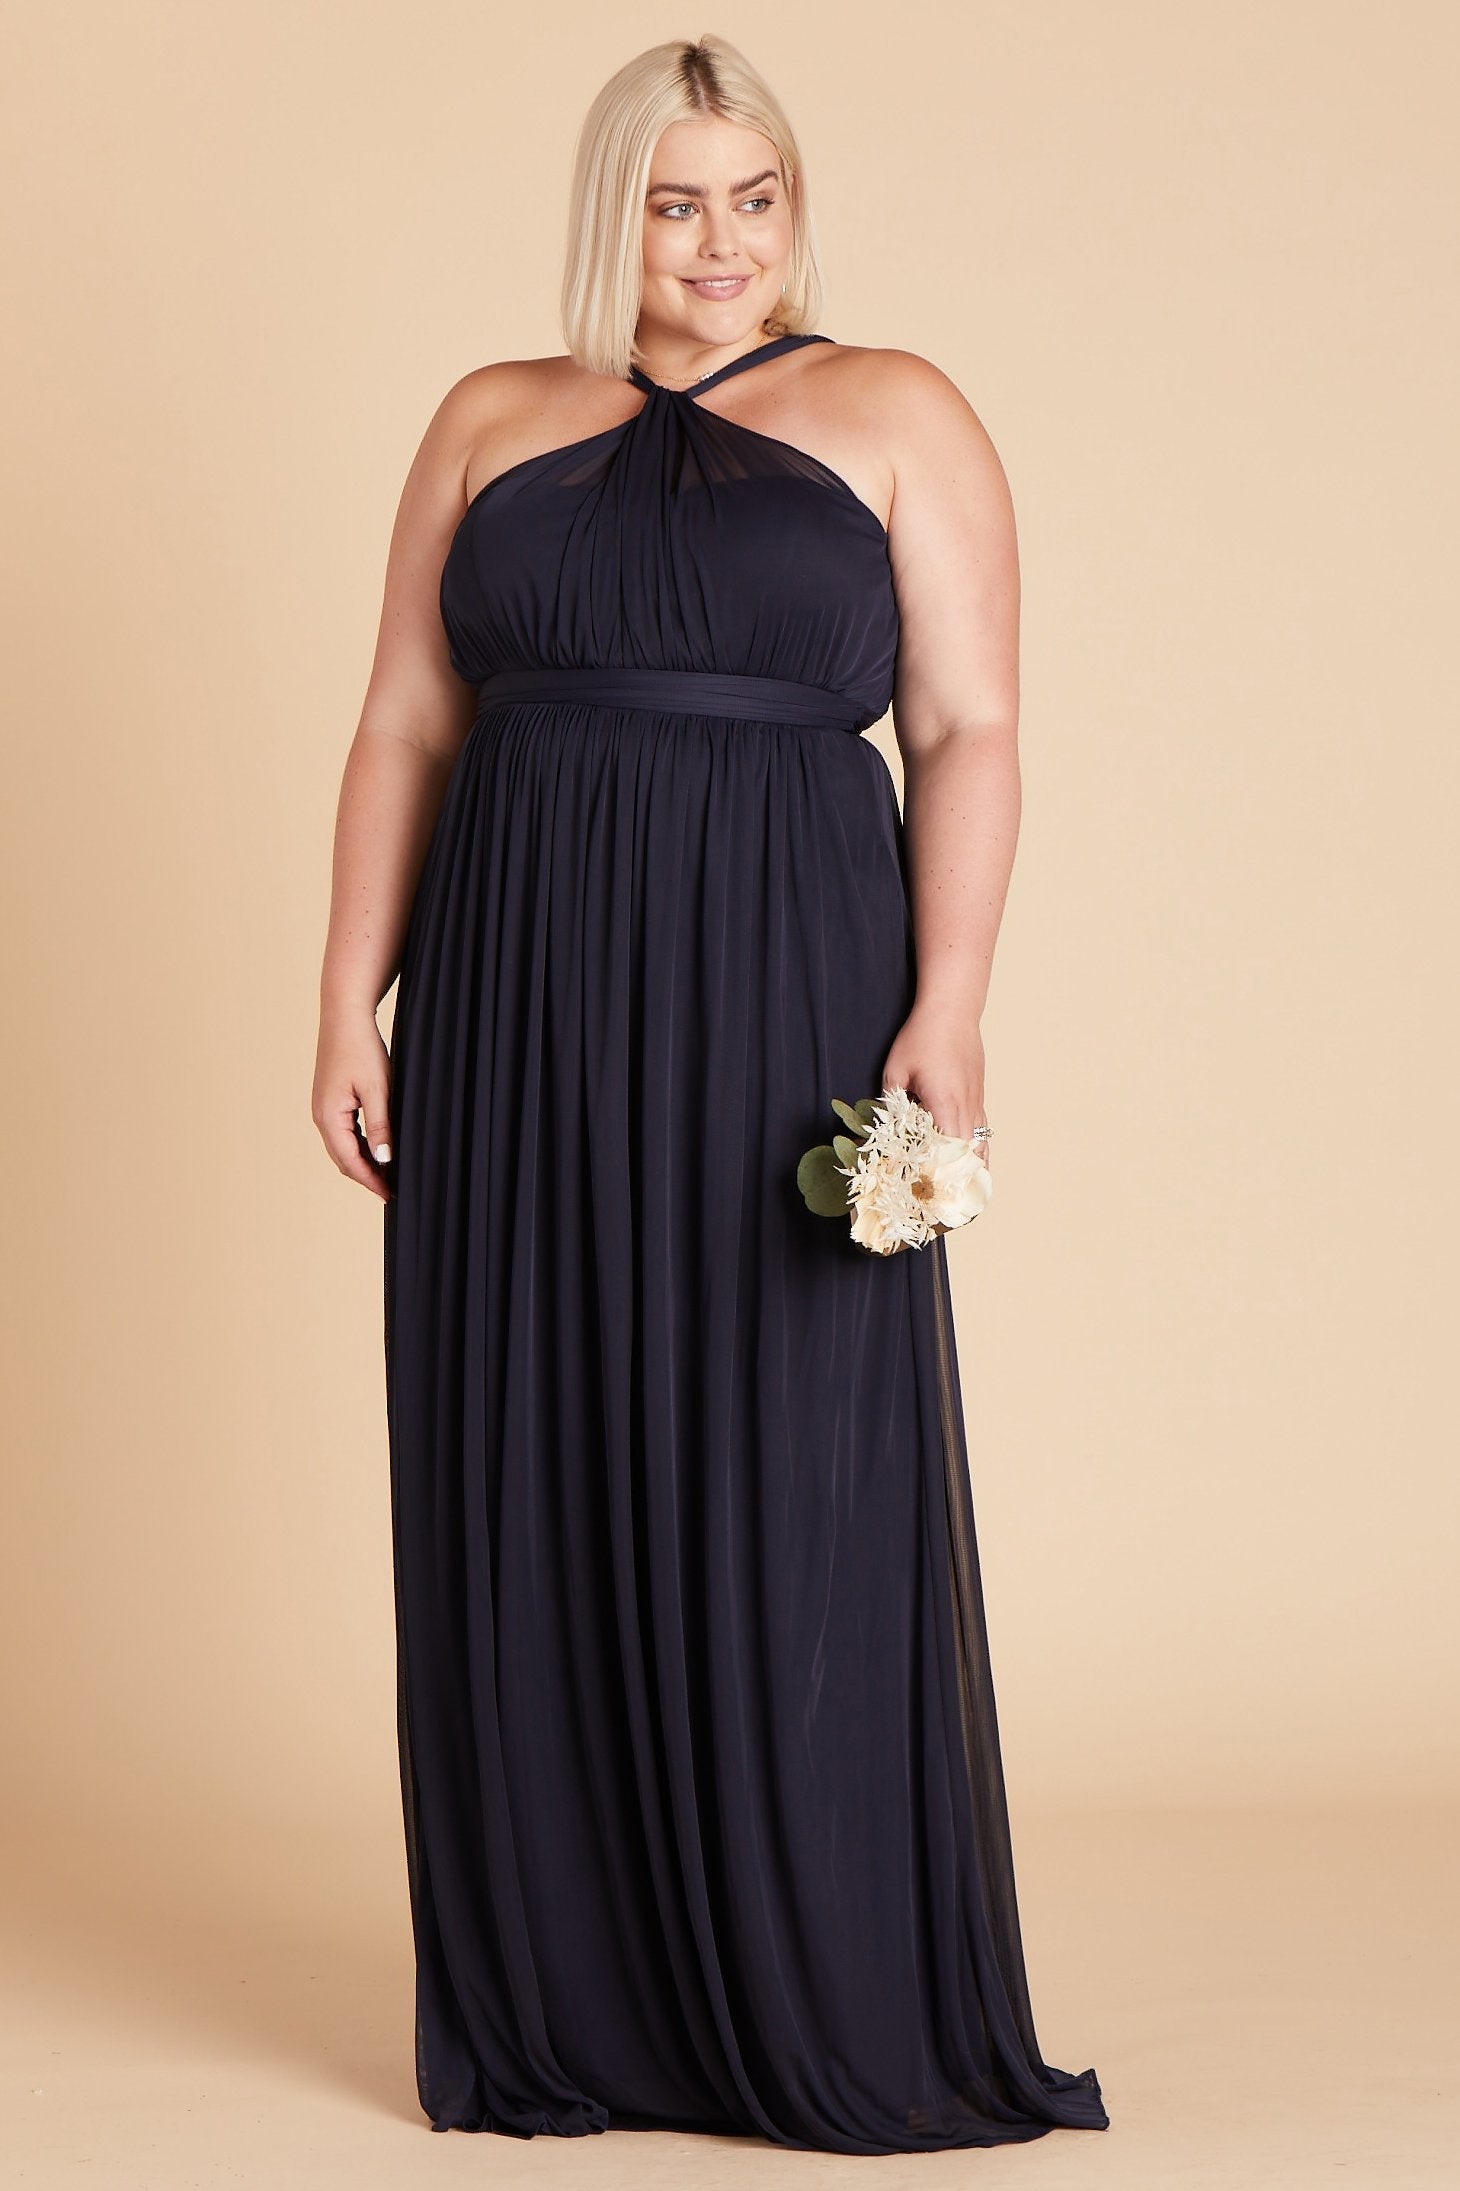 Kiko plus size bridesmaid dress in navy blue chiffon by Birdy Grey, front view